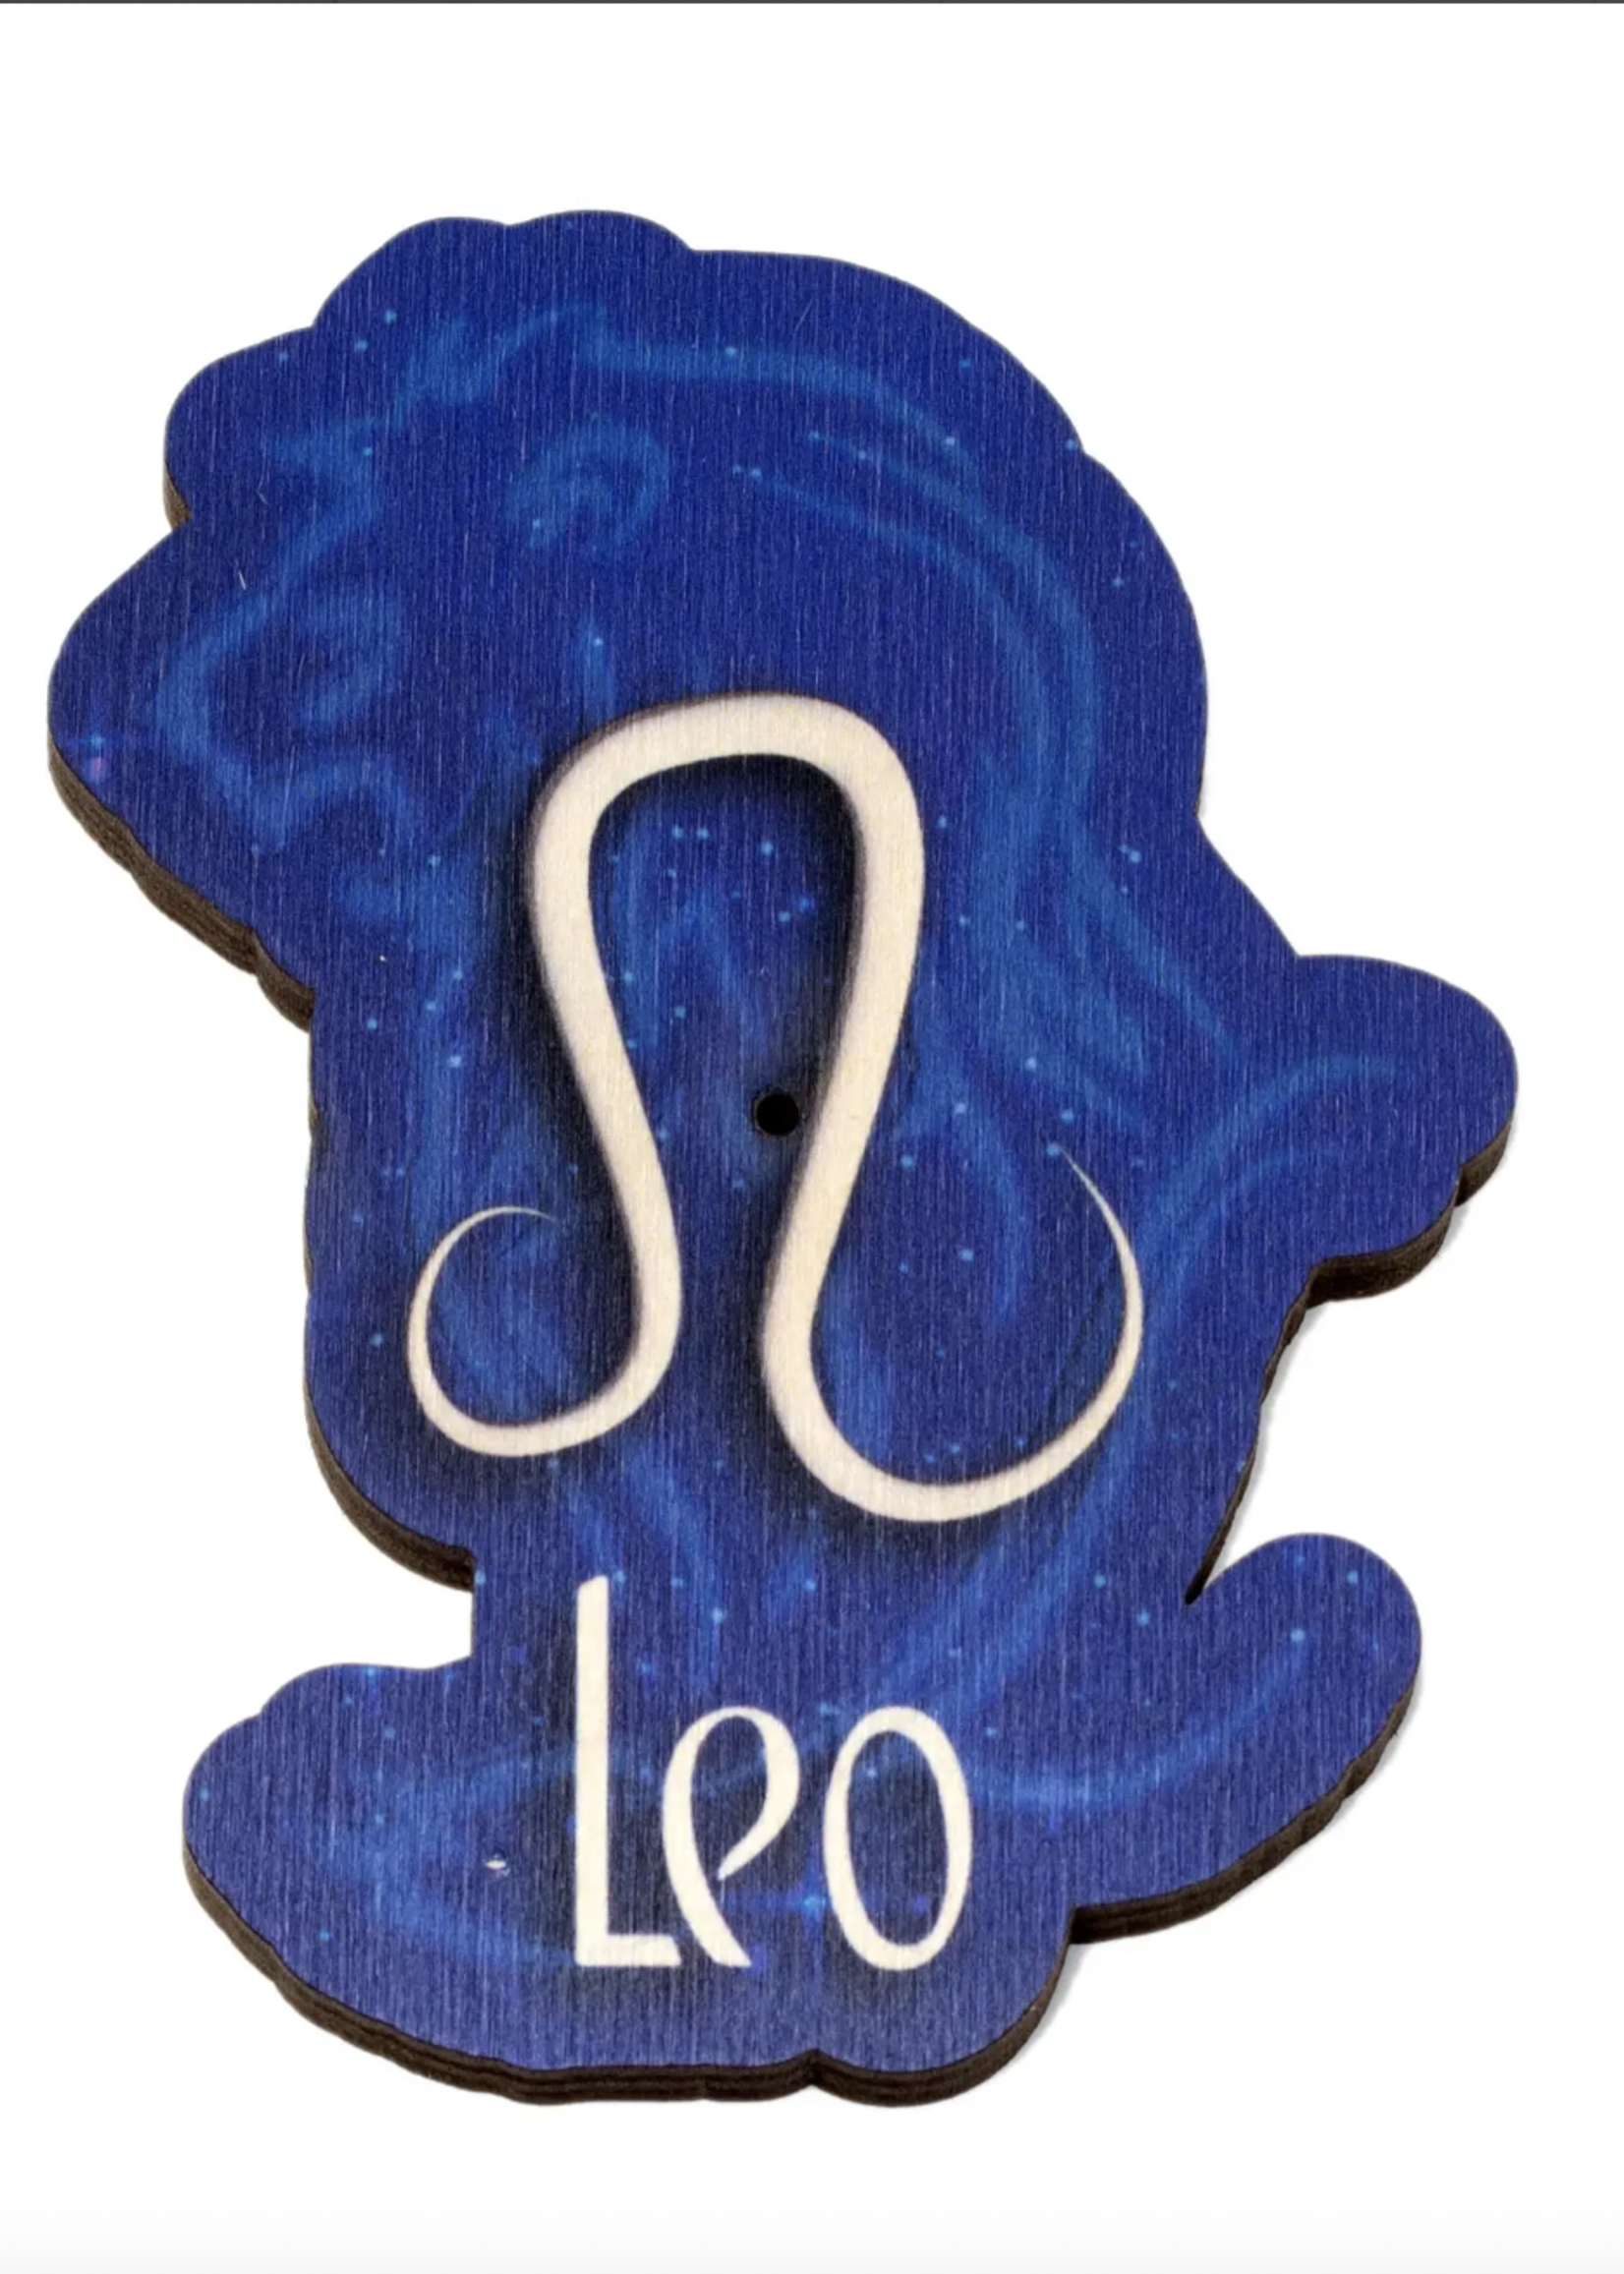 Most Amazing Leo Wooden Keychain